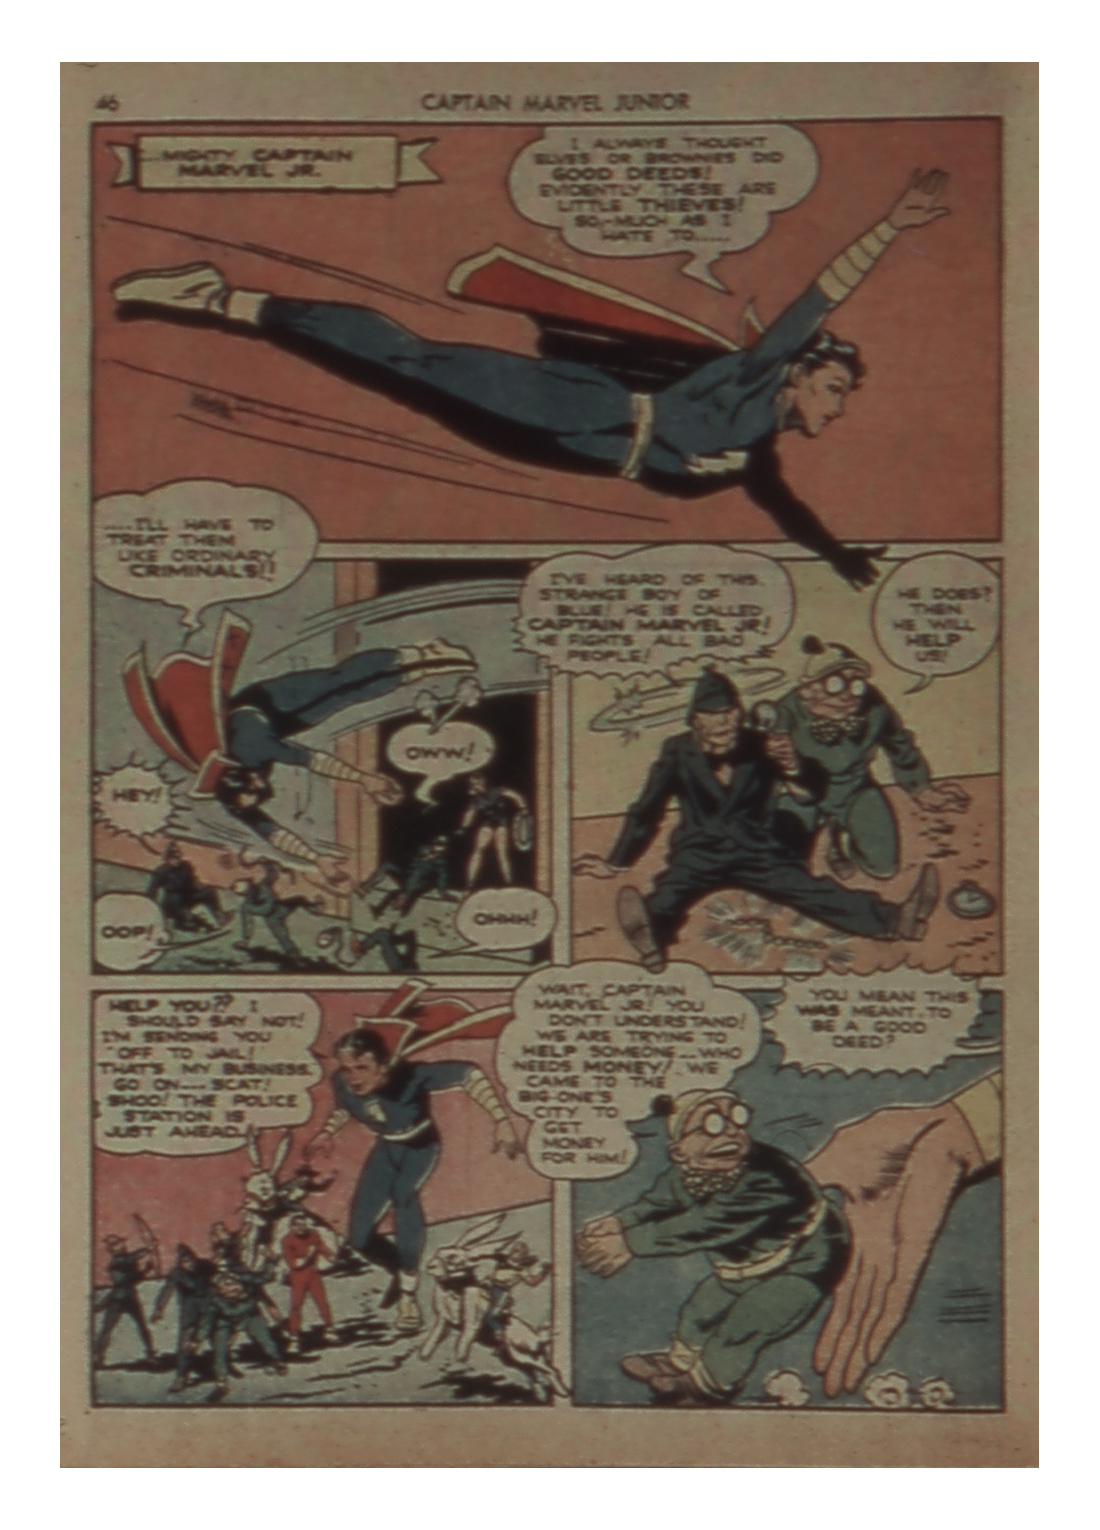 Read online Captain Marvel, Jr. comic -  Issue #5 - 46